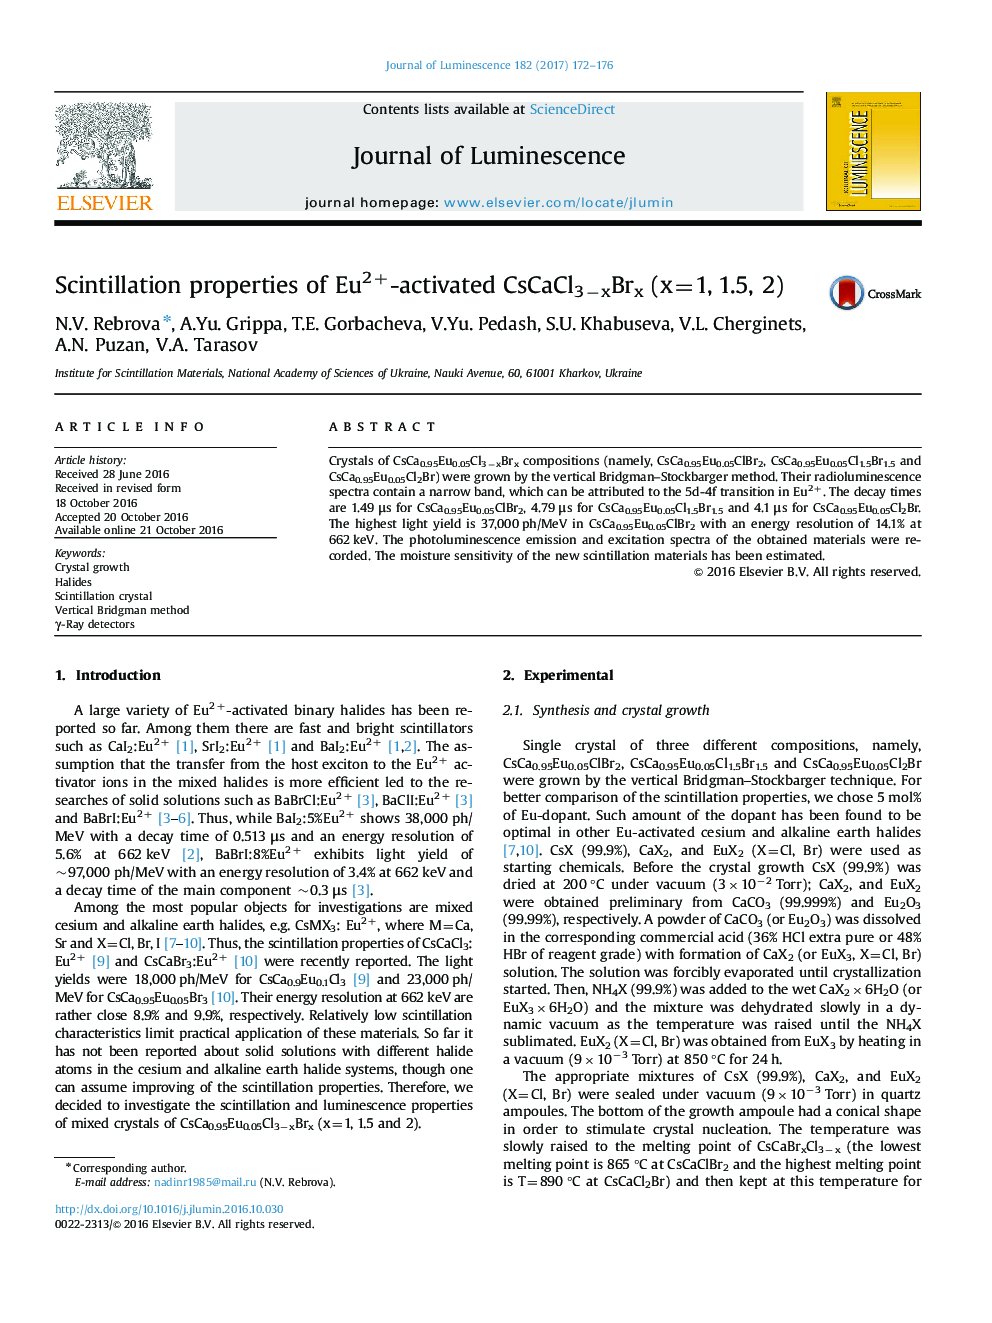 Scintillation properties of Eu2+-activated CsCaCl3âxBrx (x=1, 1.5, 2)